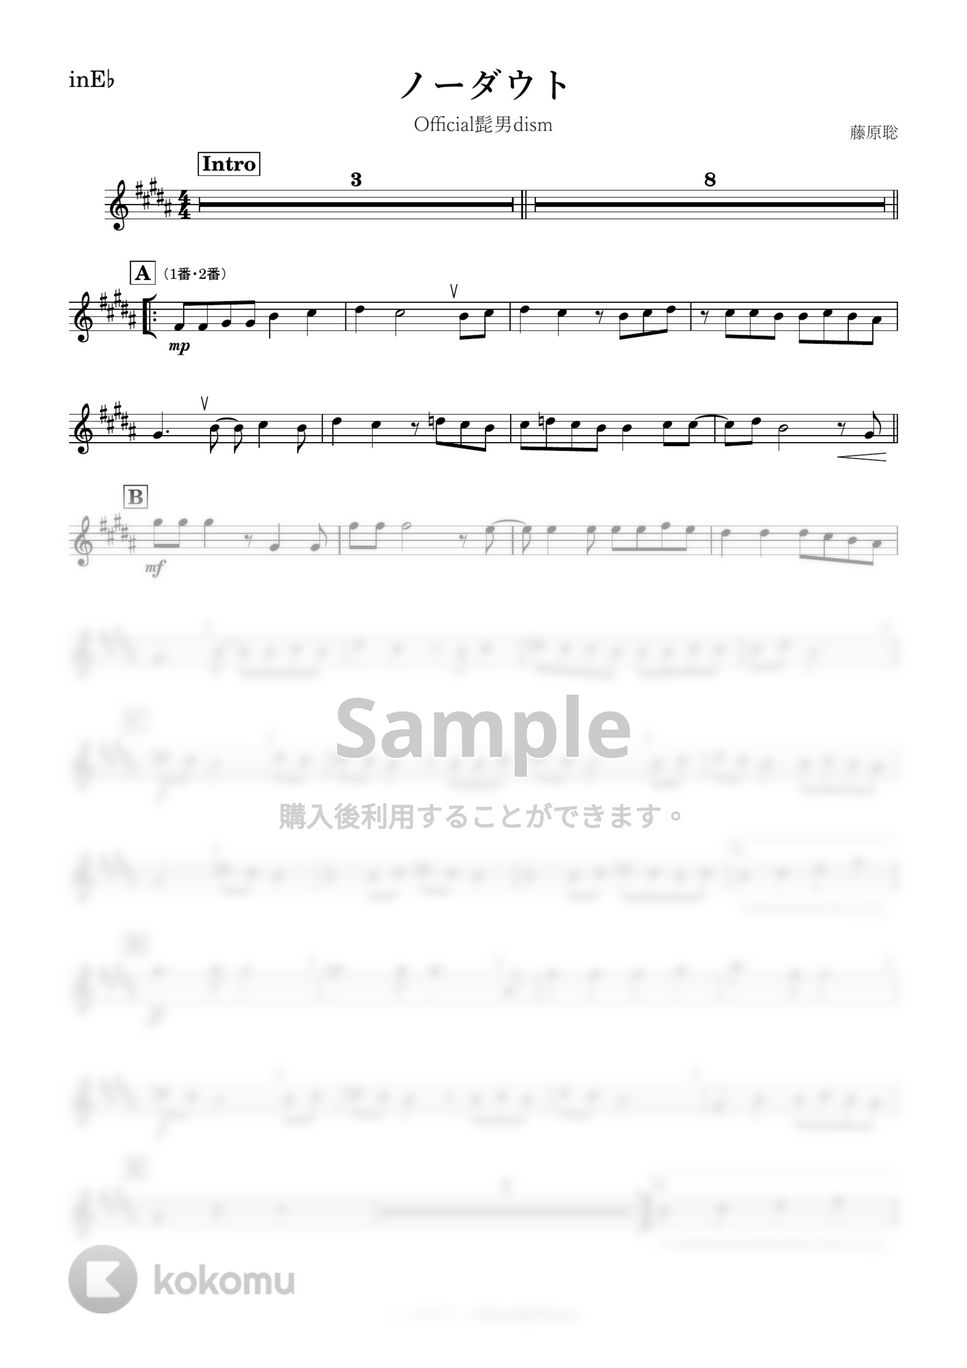 Official髭男dism - ノーダウト (E♭) by kanamusic